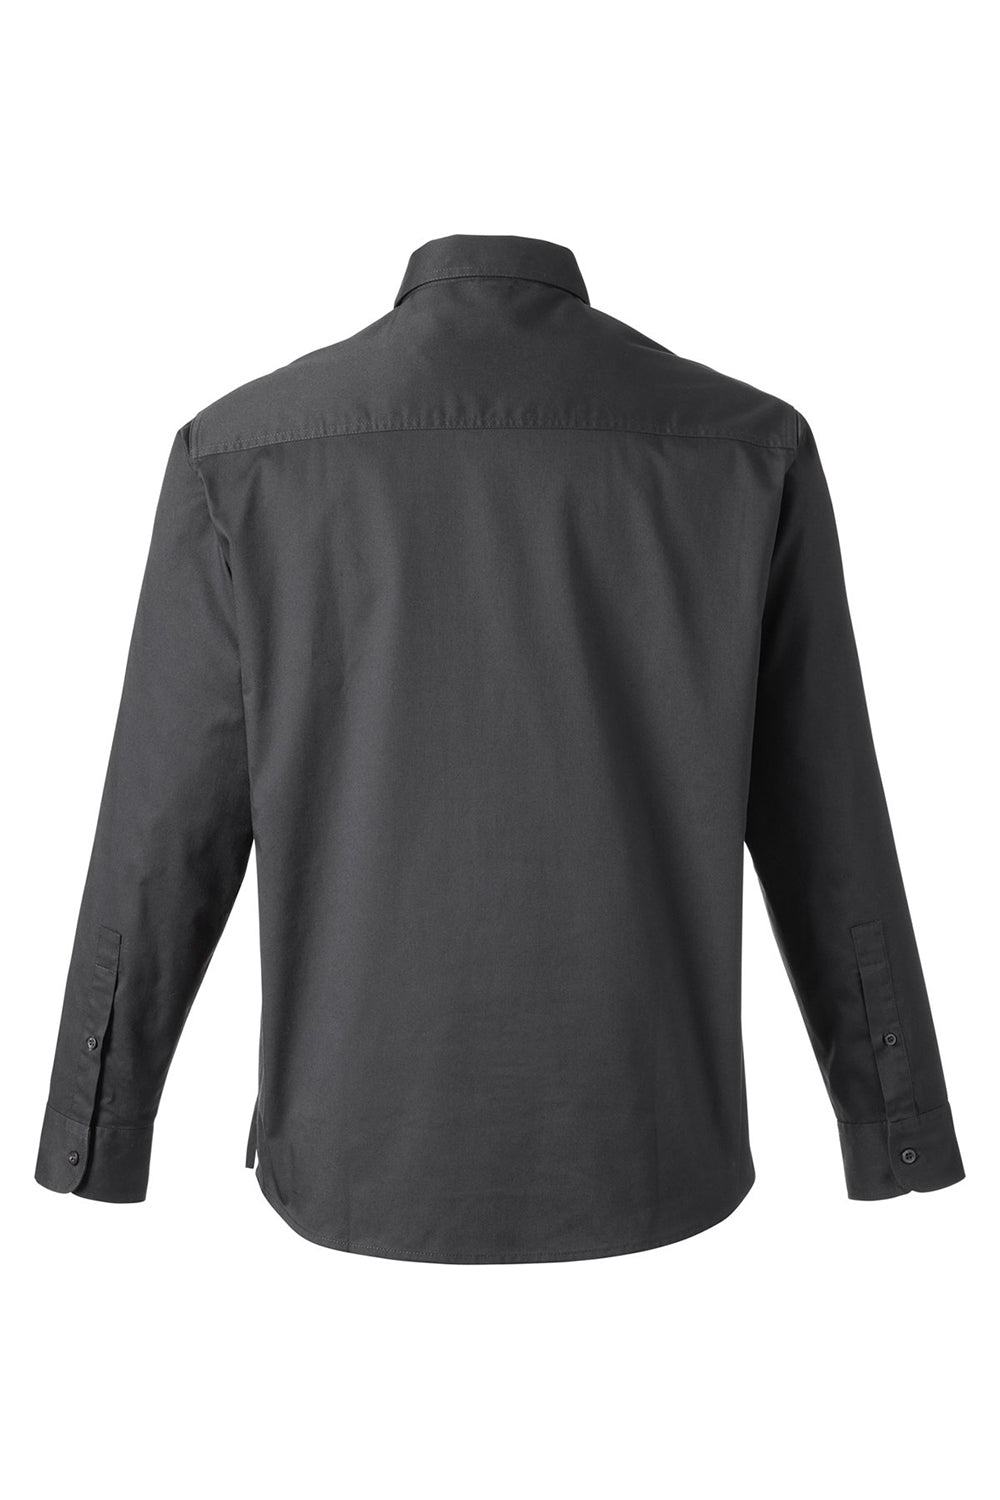 Harriton M585L Mens Advantage Long Sleeve Button Down Shirt w/ Double Pockets Dark Charcoal Grey Flat Back